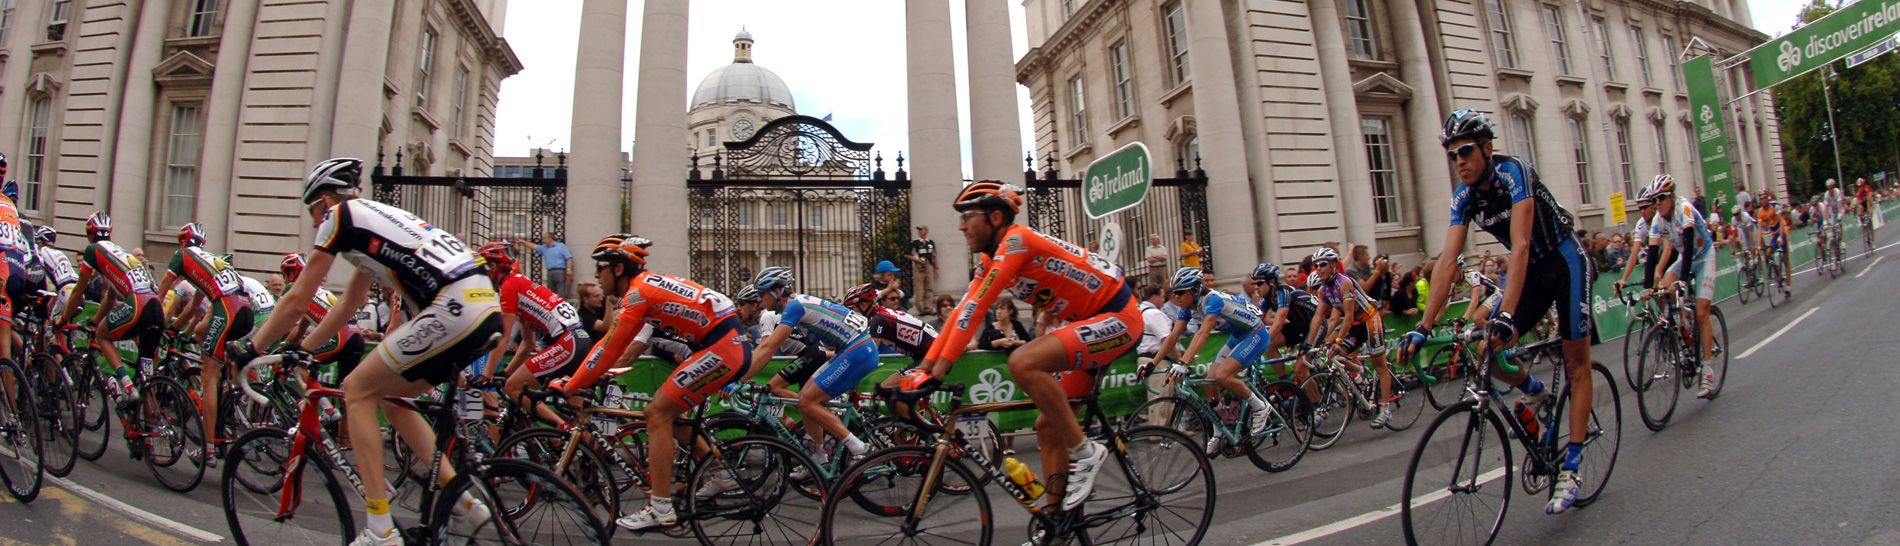 Tour of Ireland: riders in Dublin